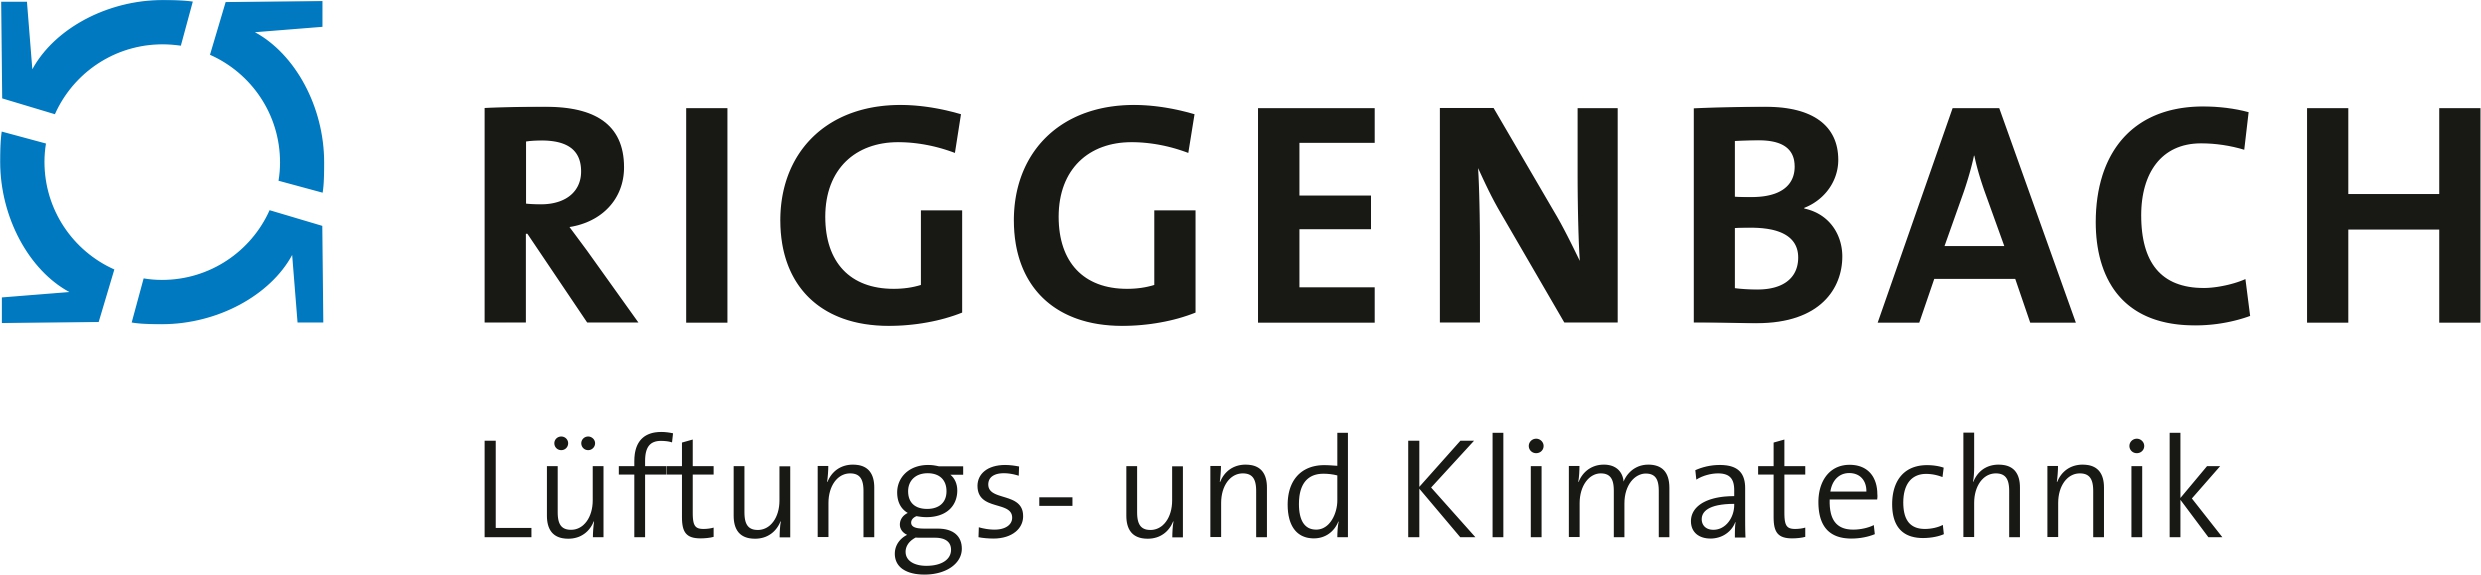 image-11417657-Riggenbach_Logo-c9f0f.jpg